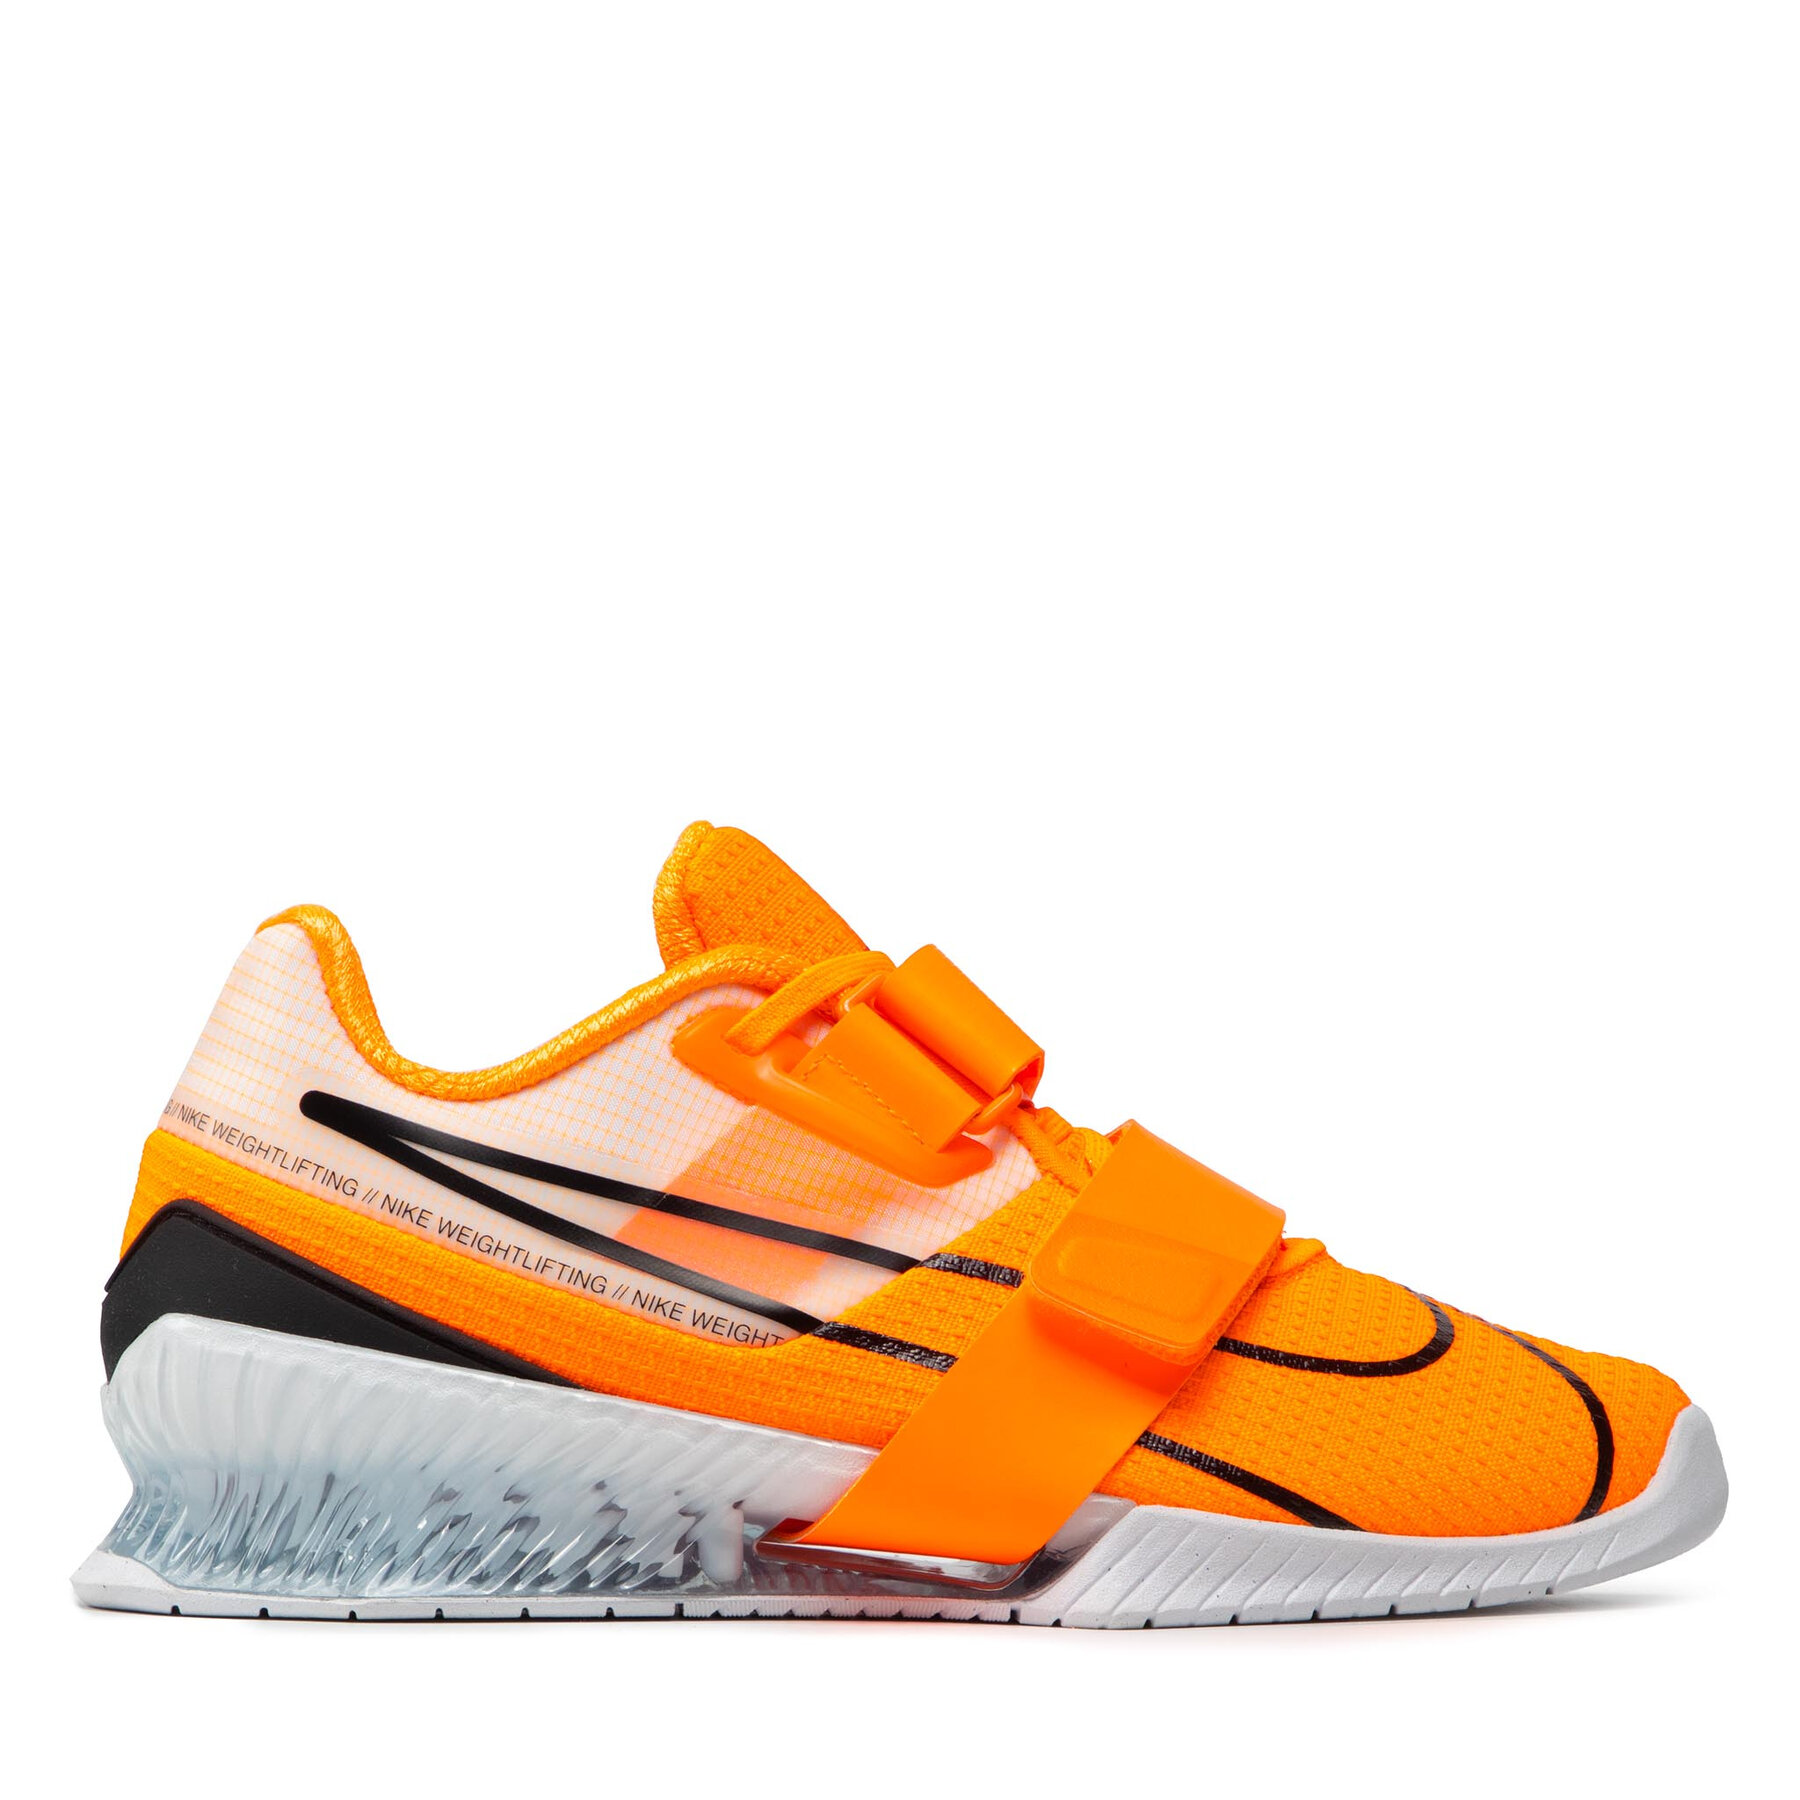 Nike Romaleos 4 total orange/black/white - Zapatillas deportivas